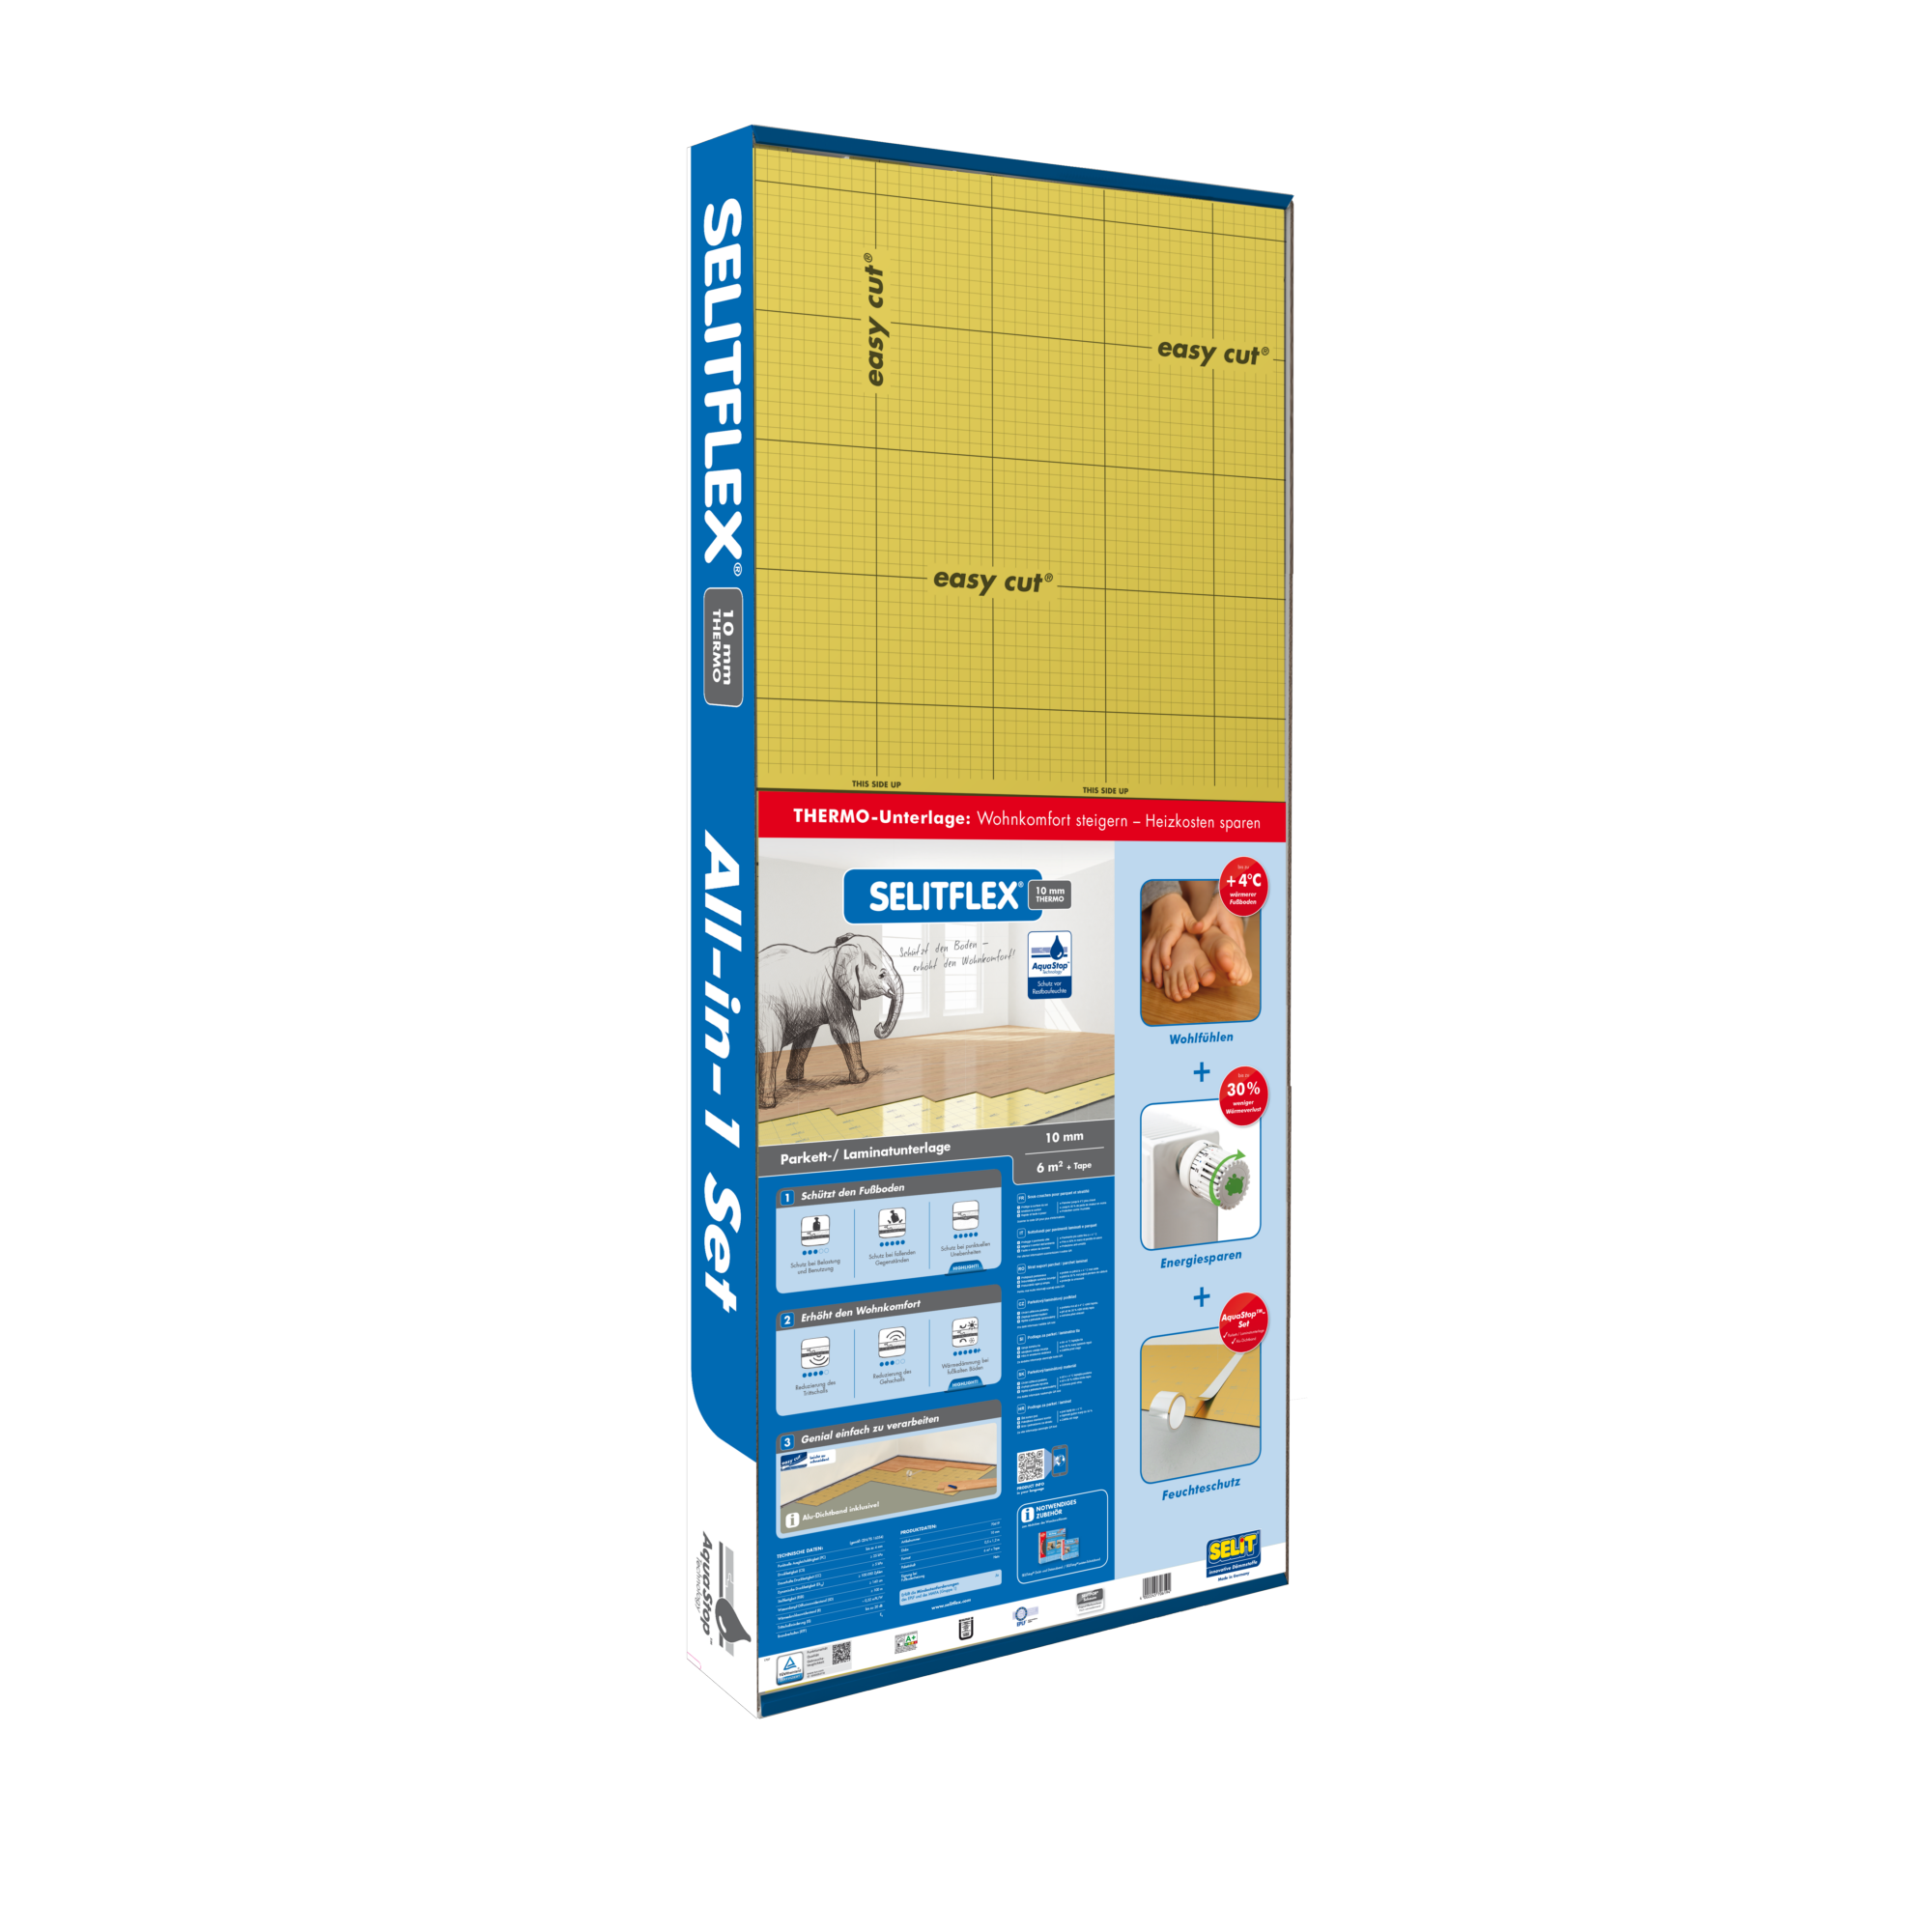 Parkett- und Laminatunterlage 'Selitflex 10 mm Thermo', 0,5 m x 1,2 m, 6 m² +Tape + product picture